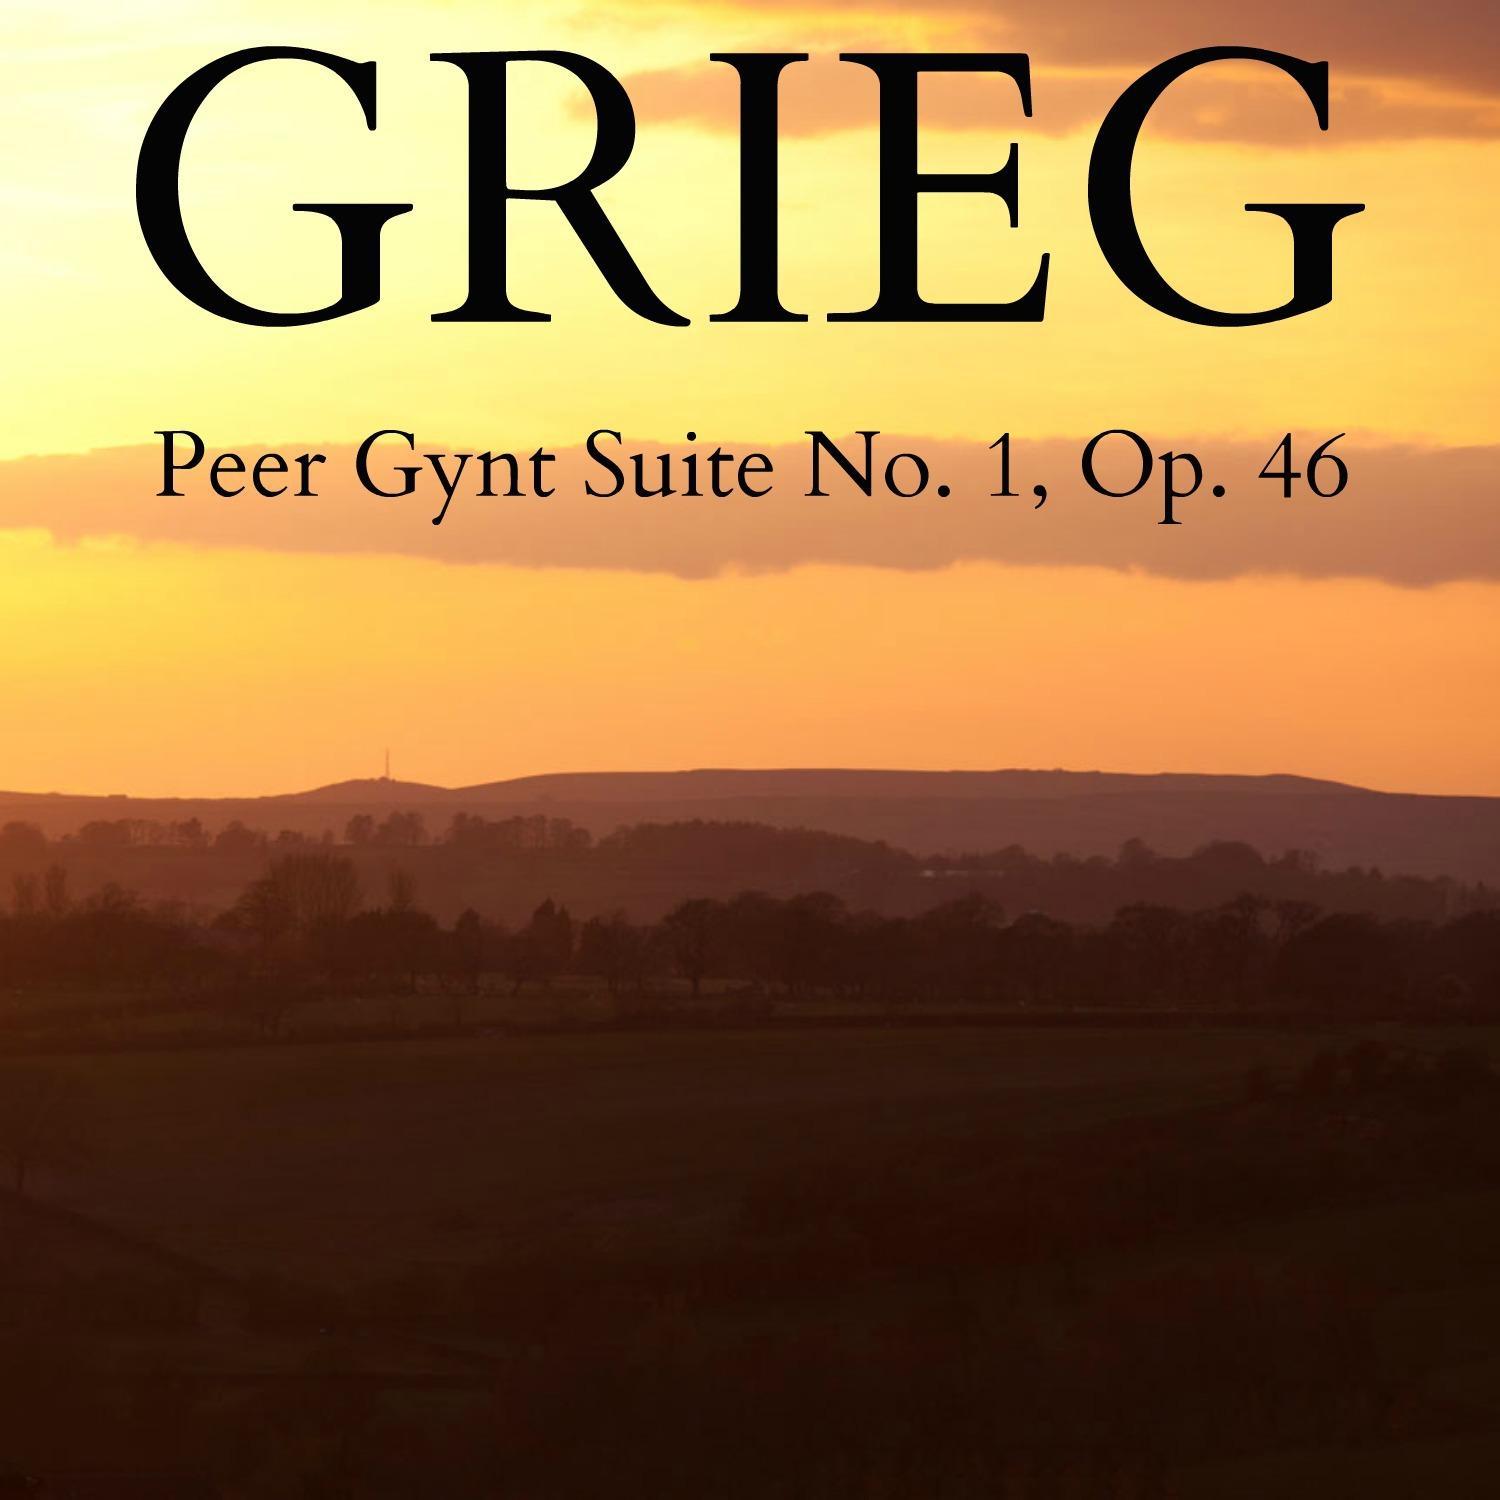 Grieg - Peer Gynt Suite No.1, Op. 46